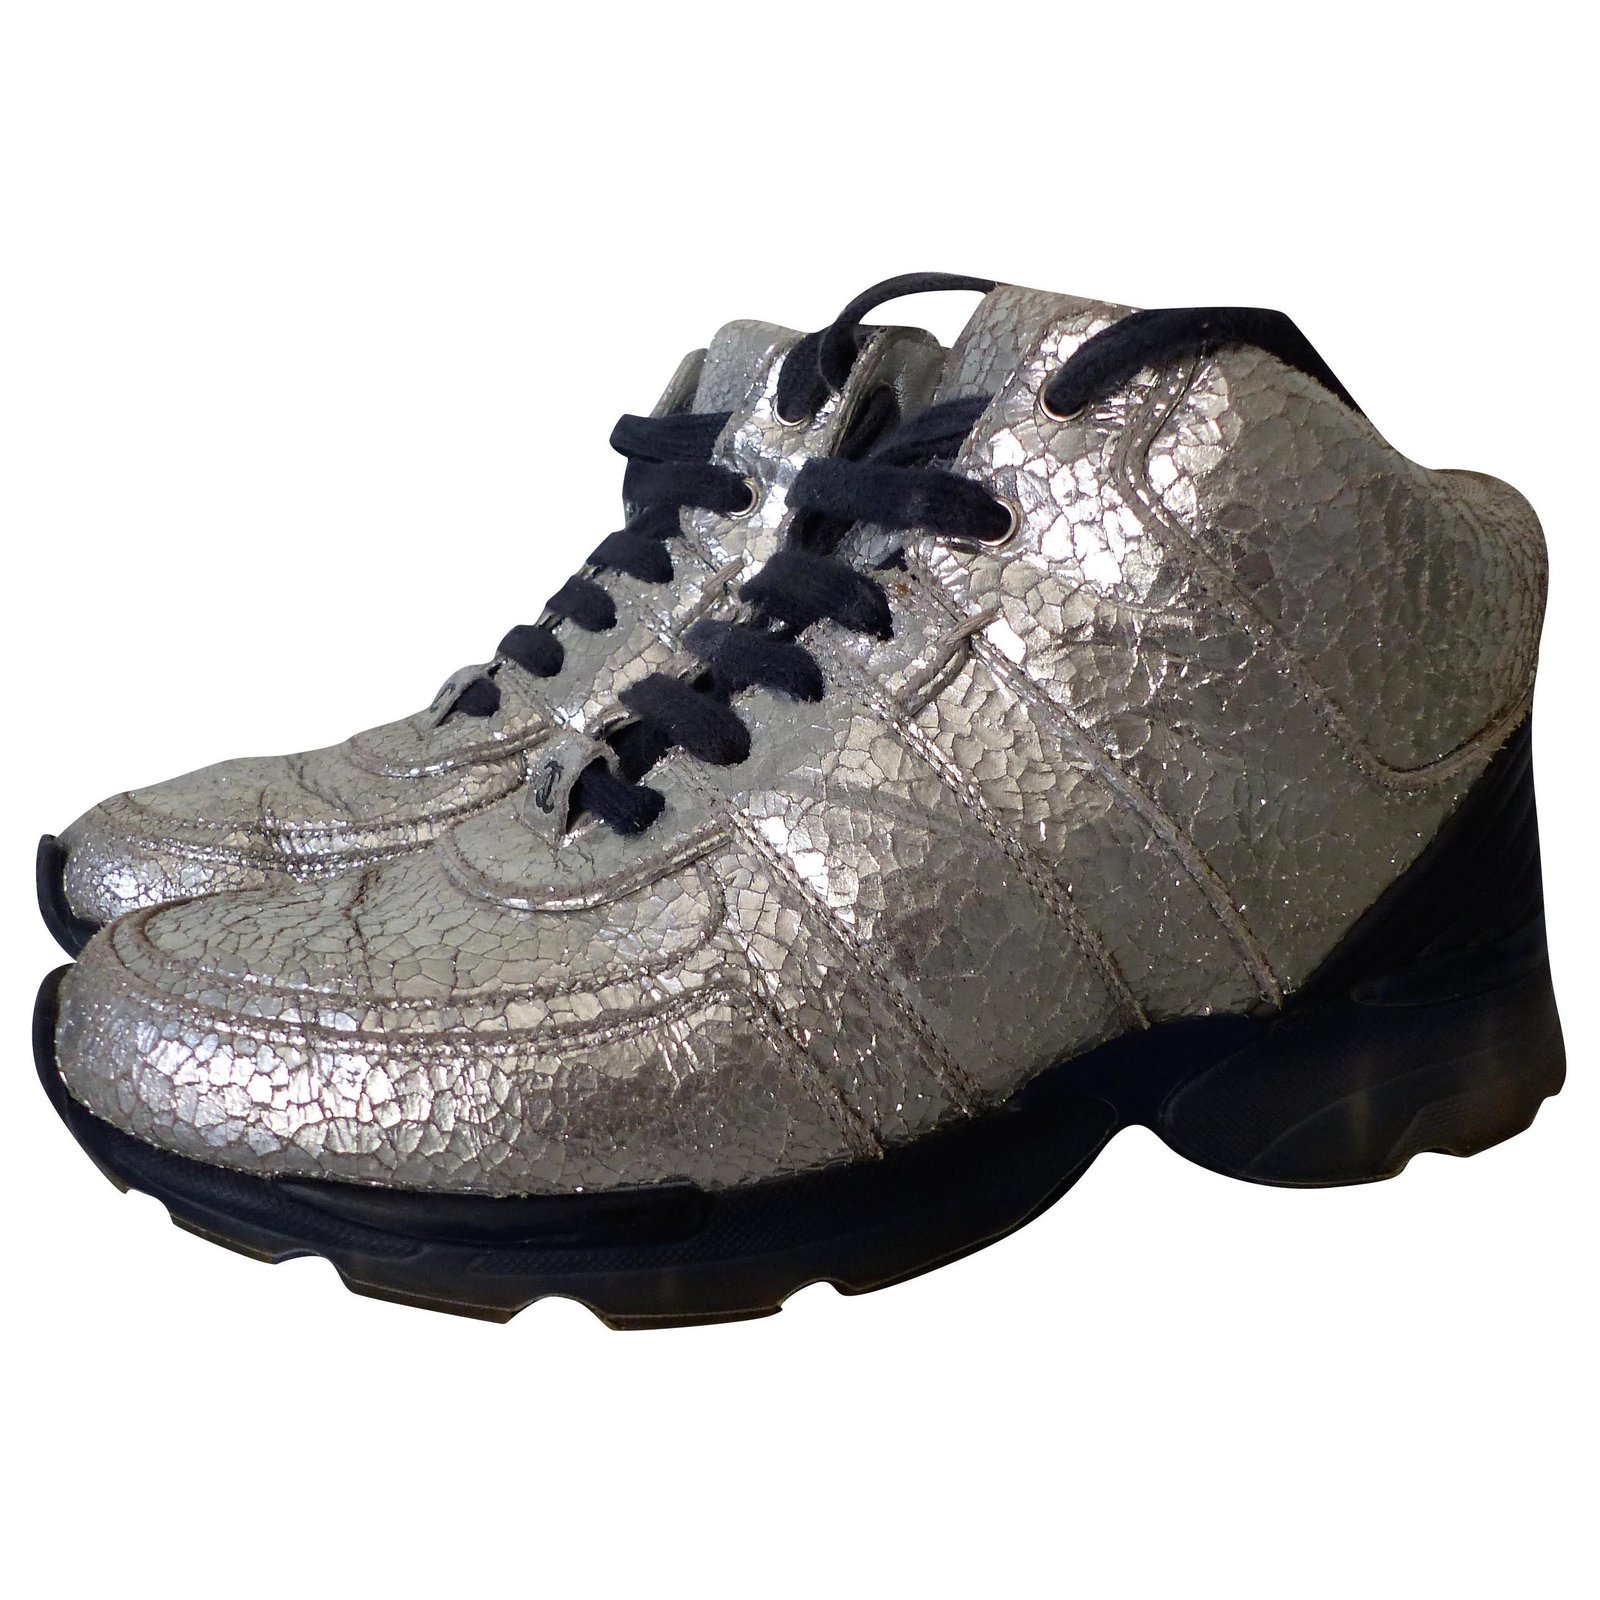 chanel metallic sneakers